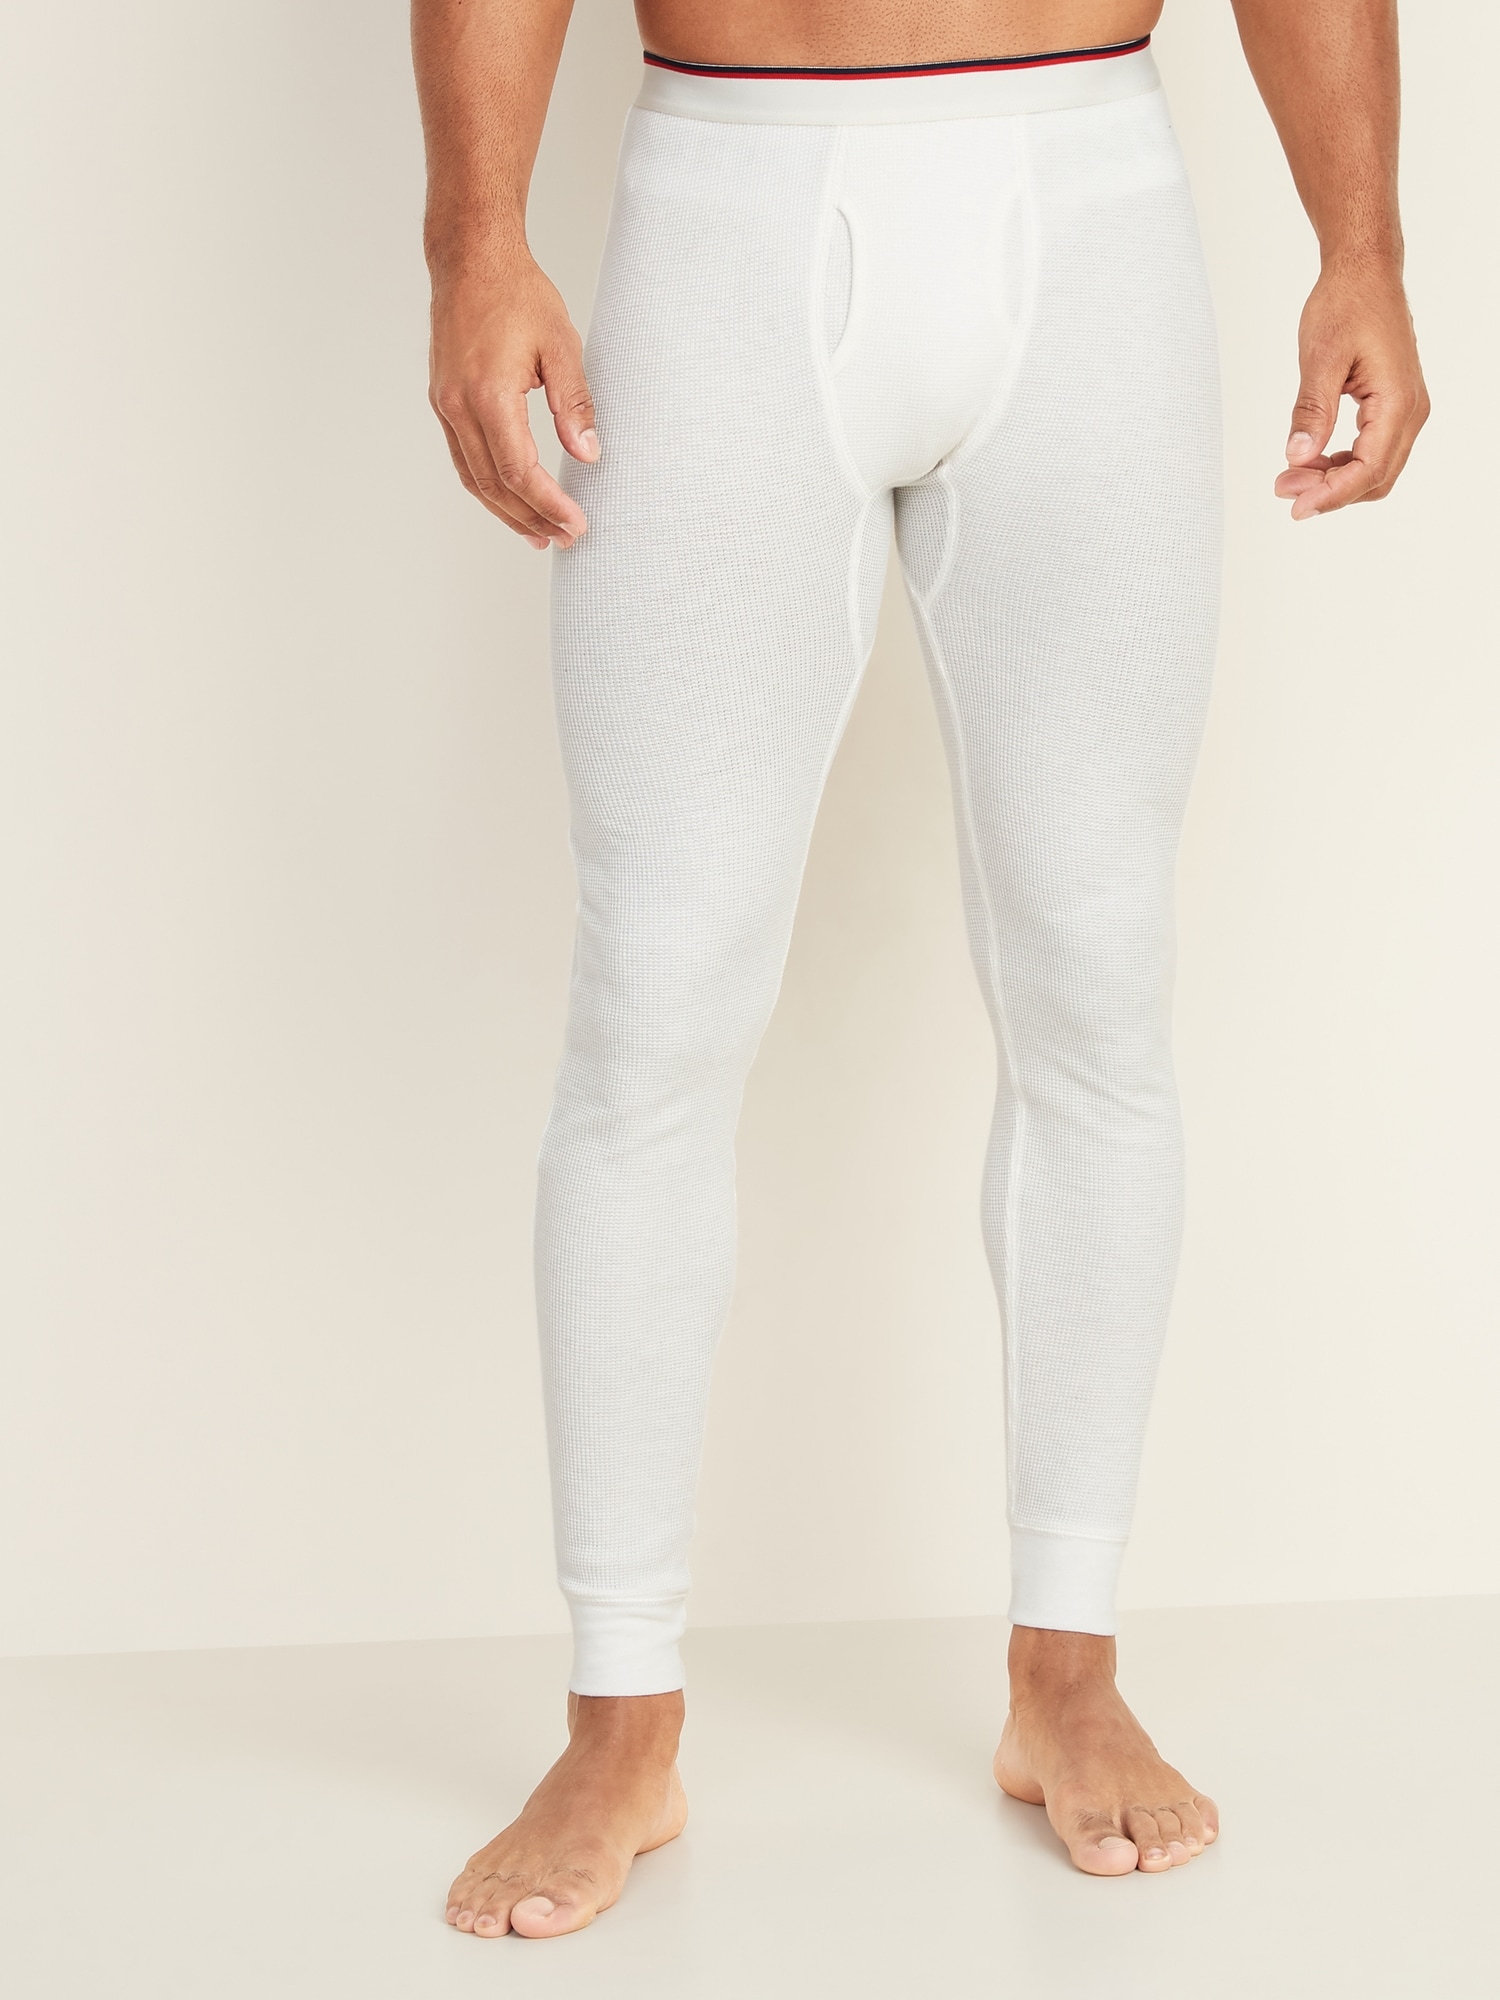 Men's Thermal Long John Underwear - White, Shop Today. Get it Tomorrow!